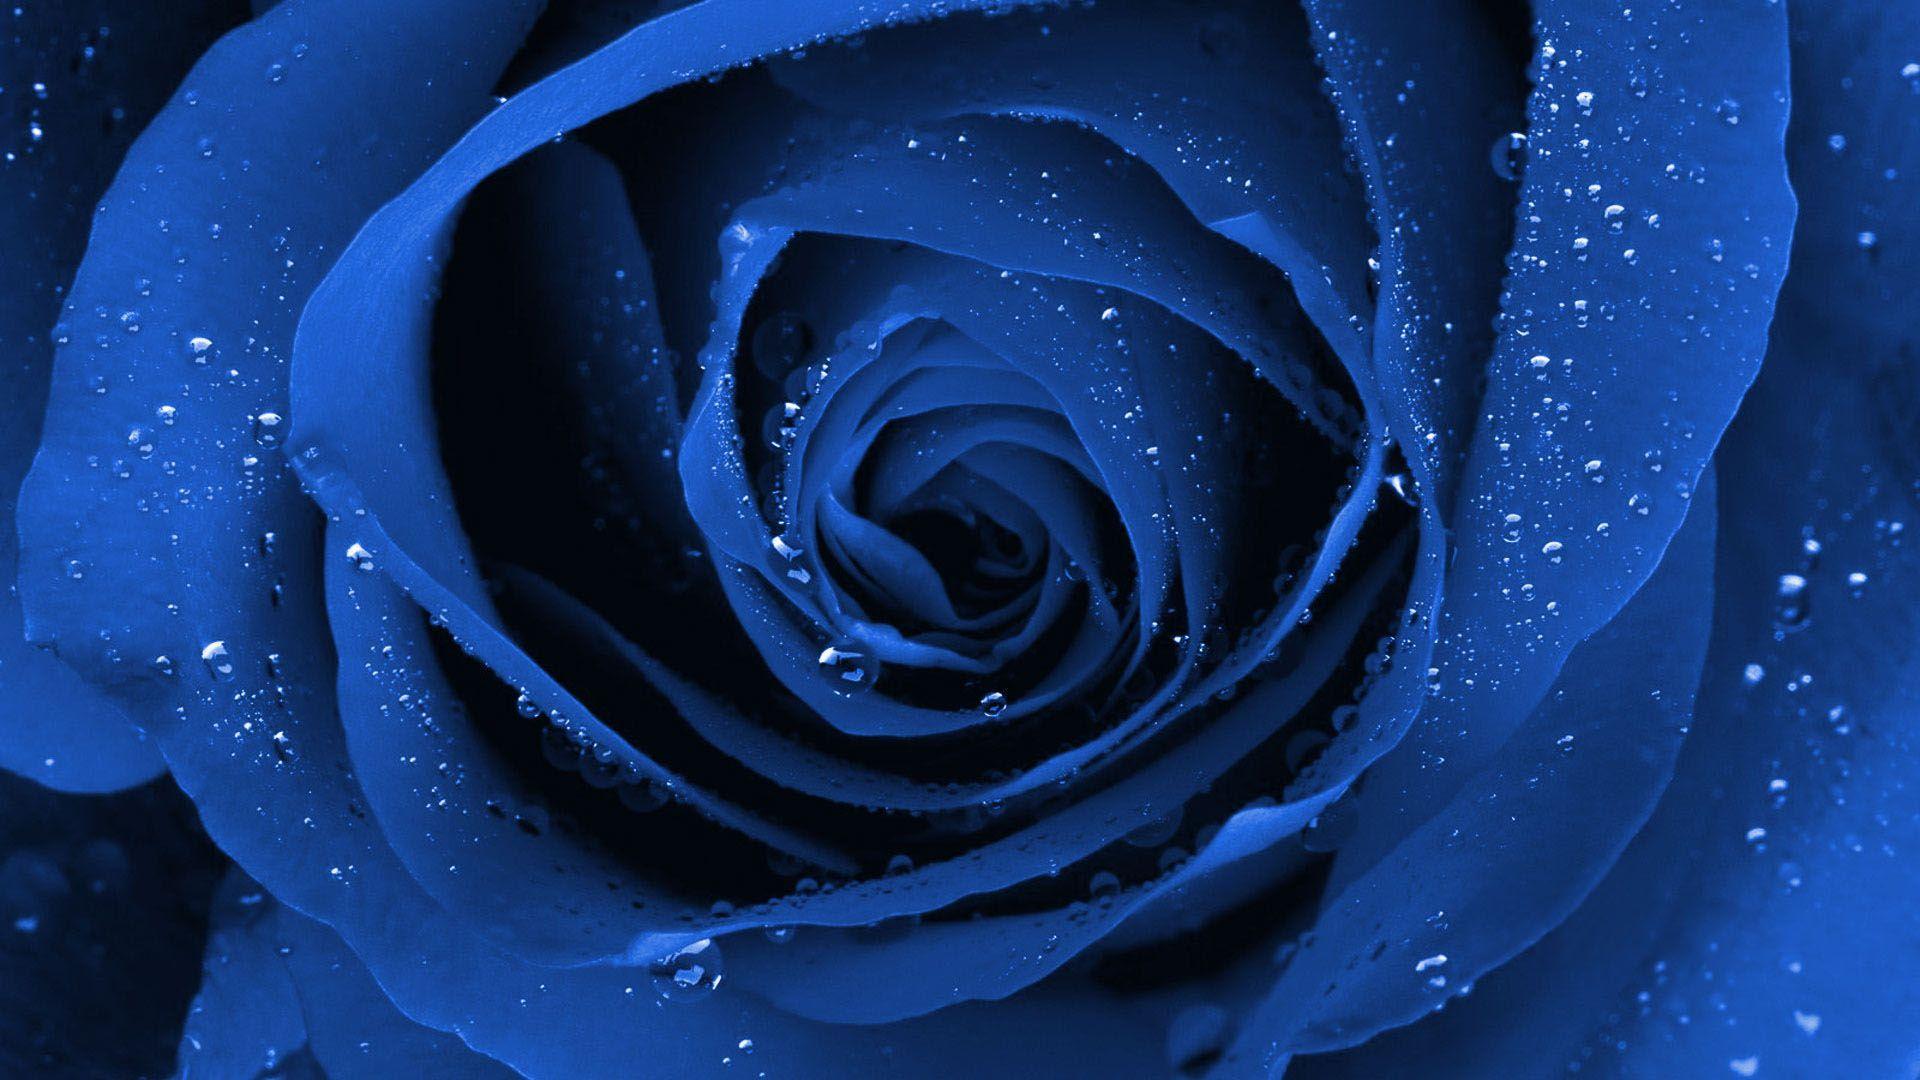 Free Morning Dew On Blue Rose Wallpaper, Free Morning Dew On Blue